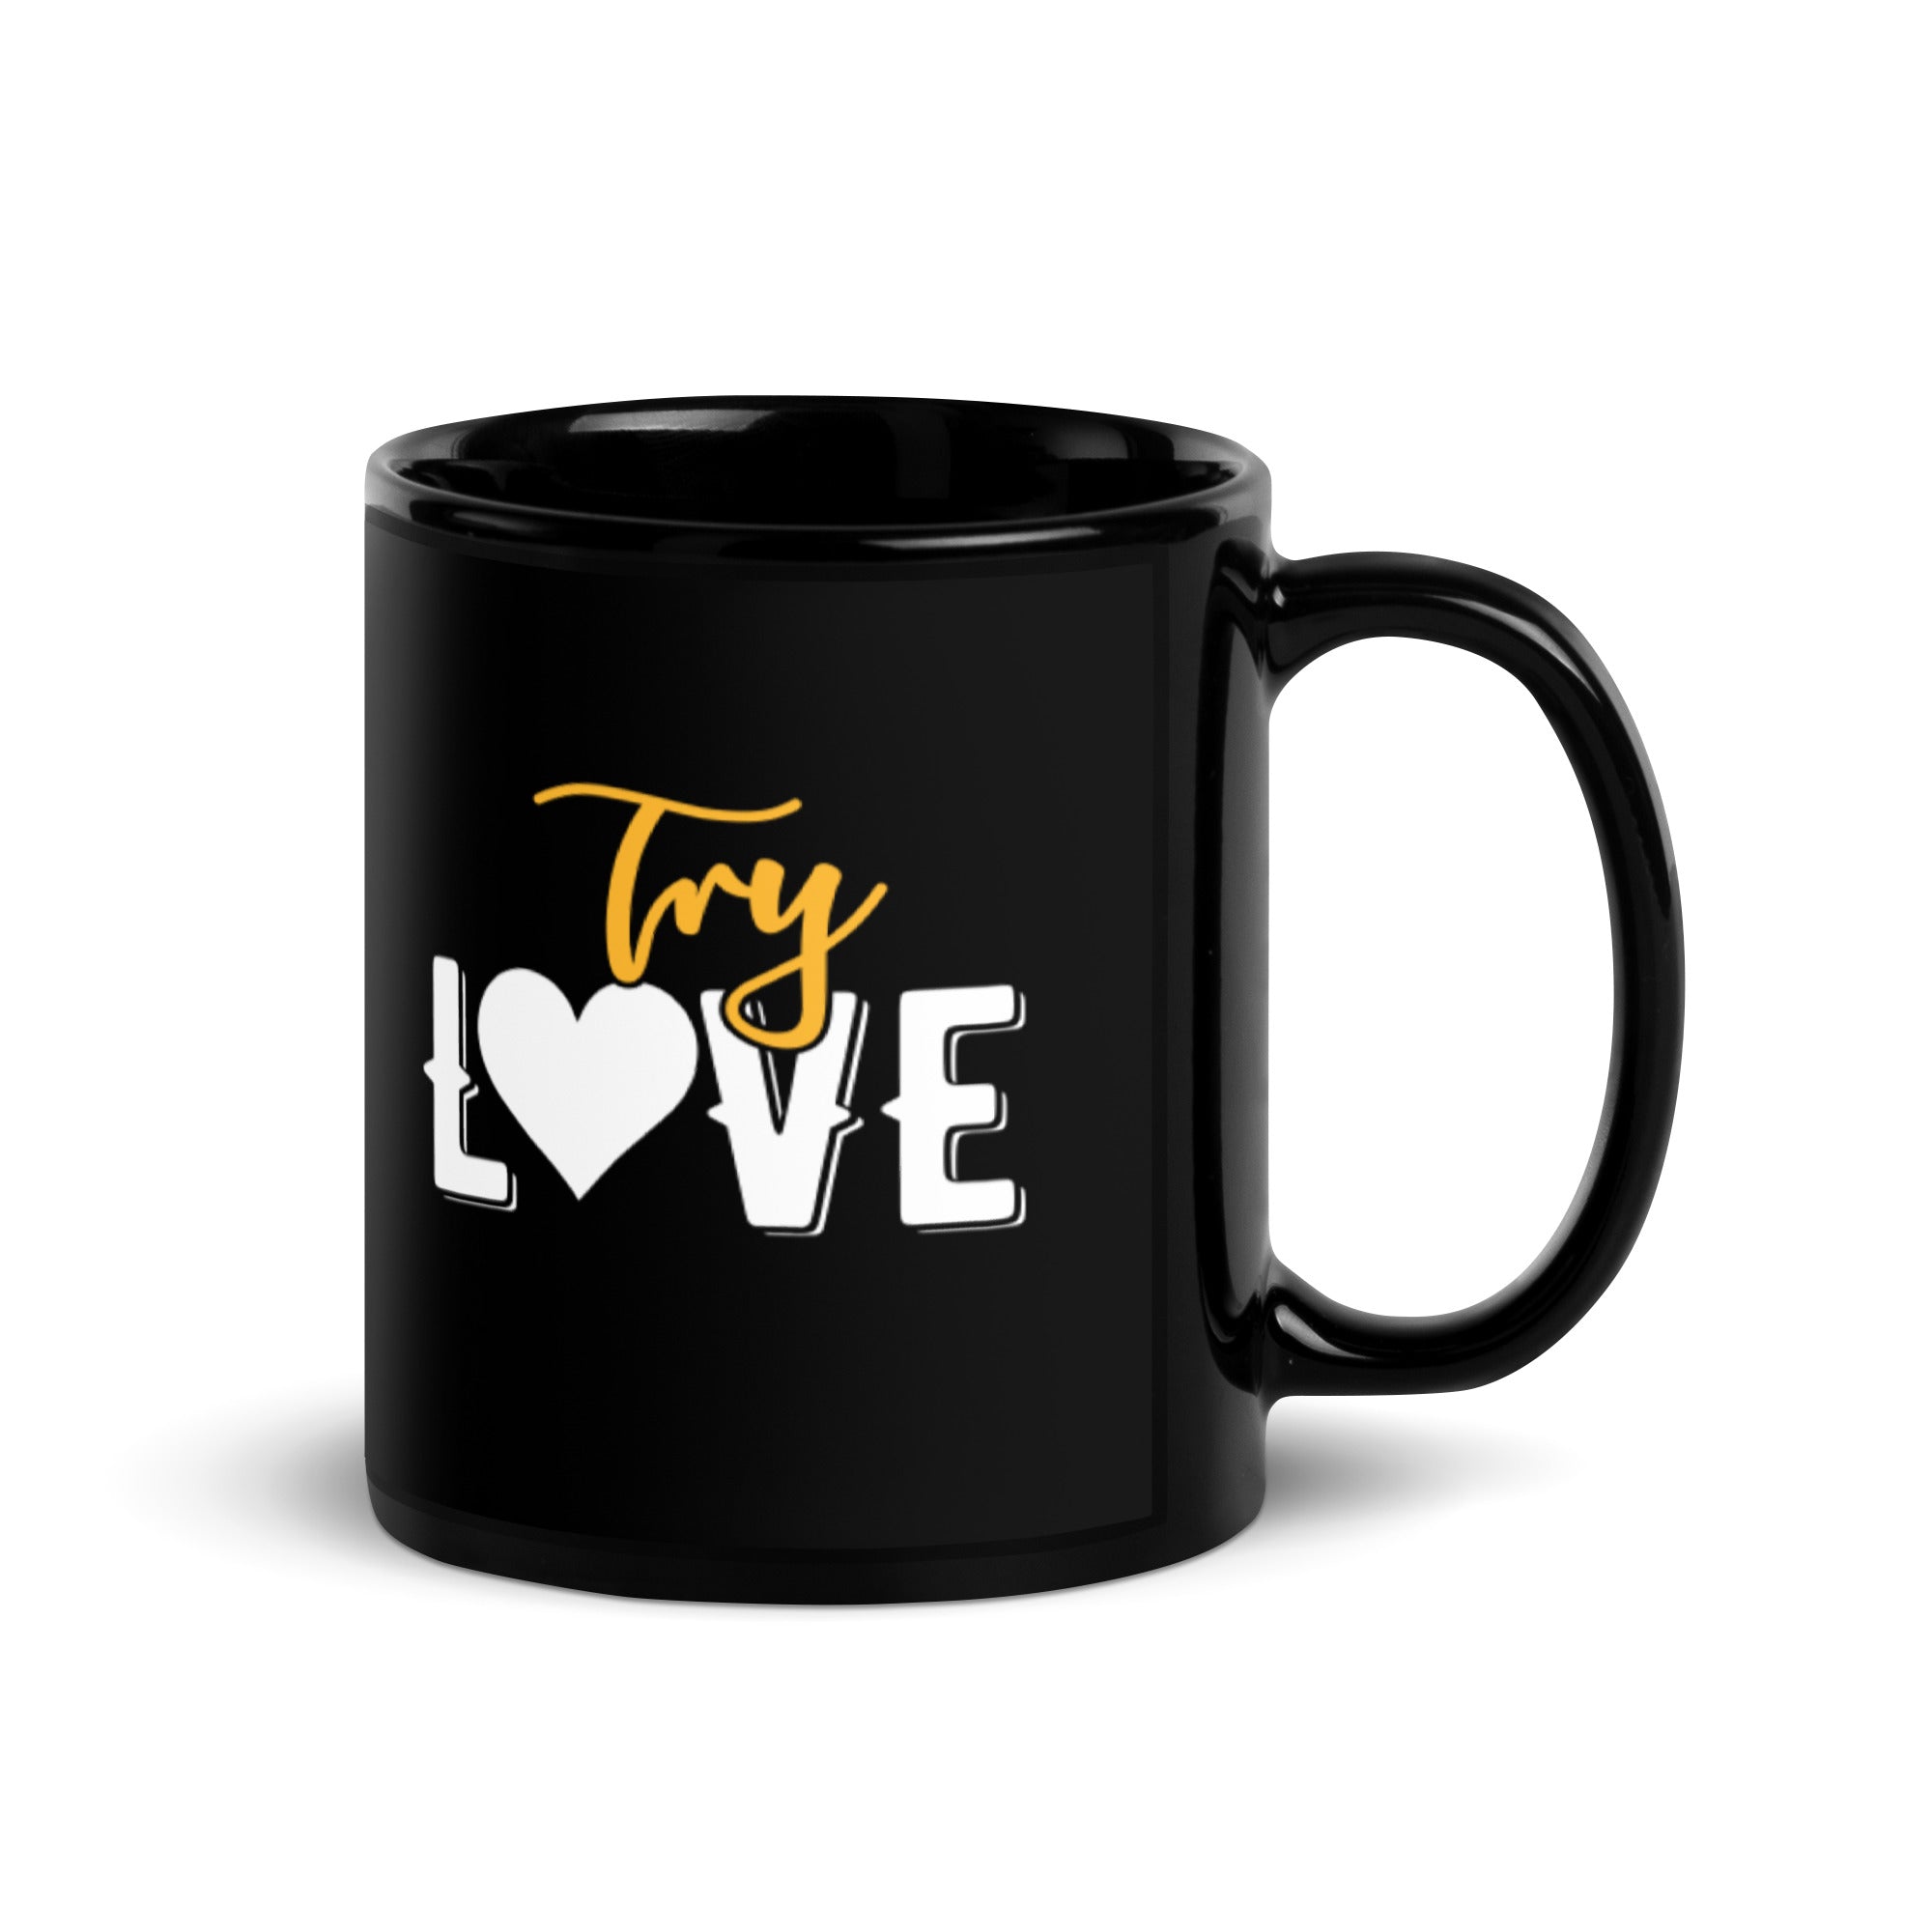 "Try Love" mug